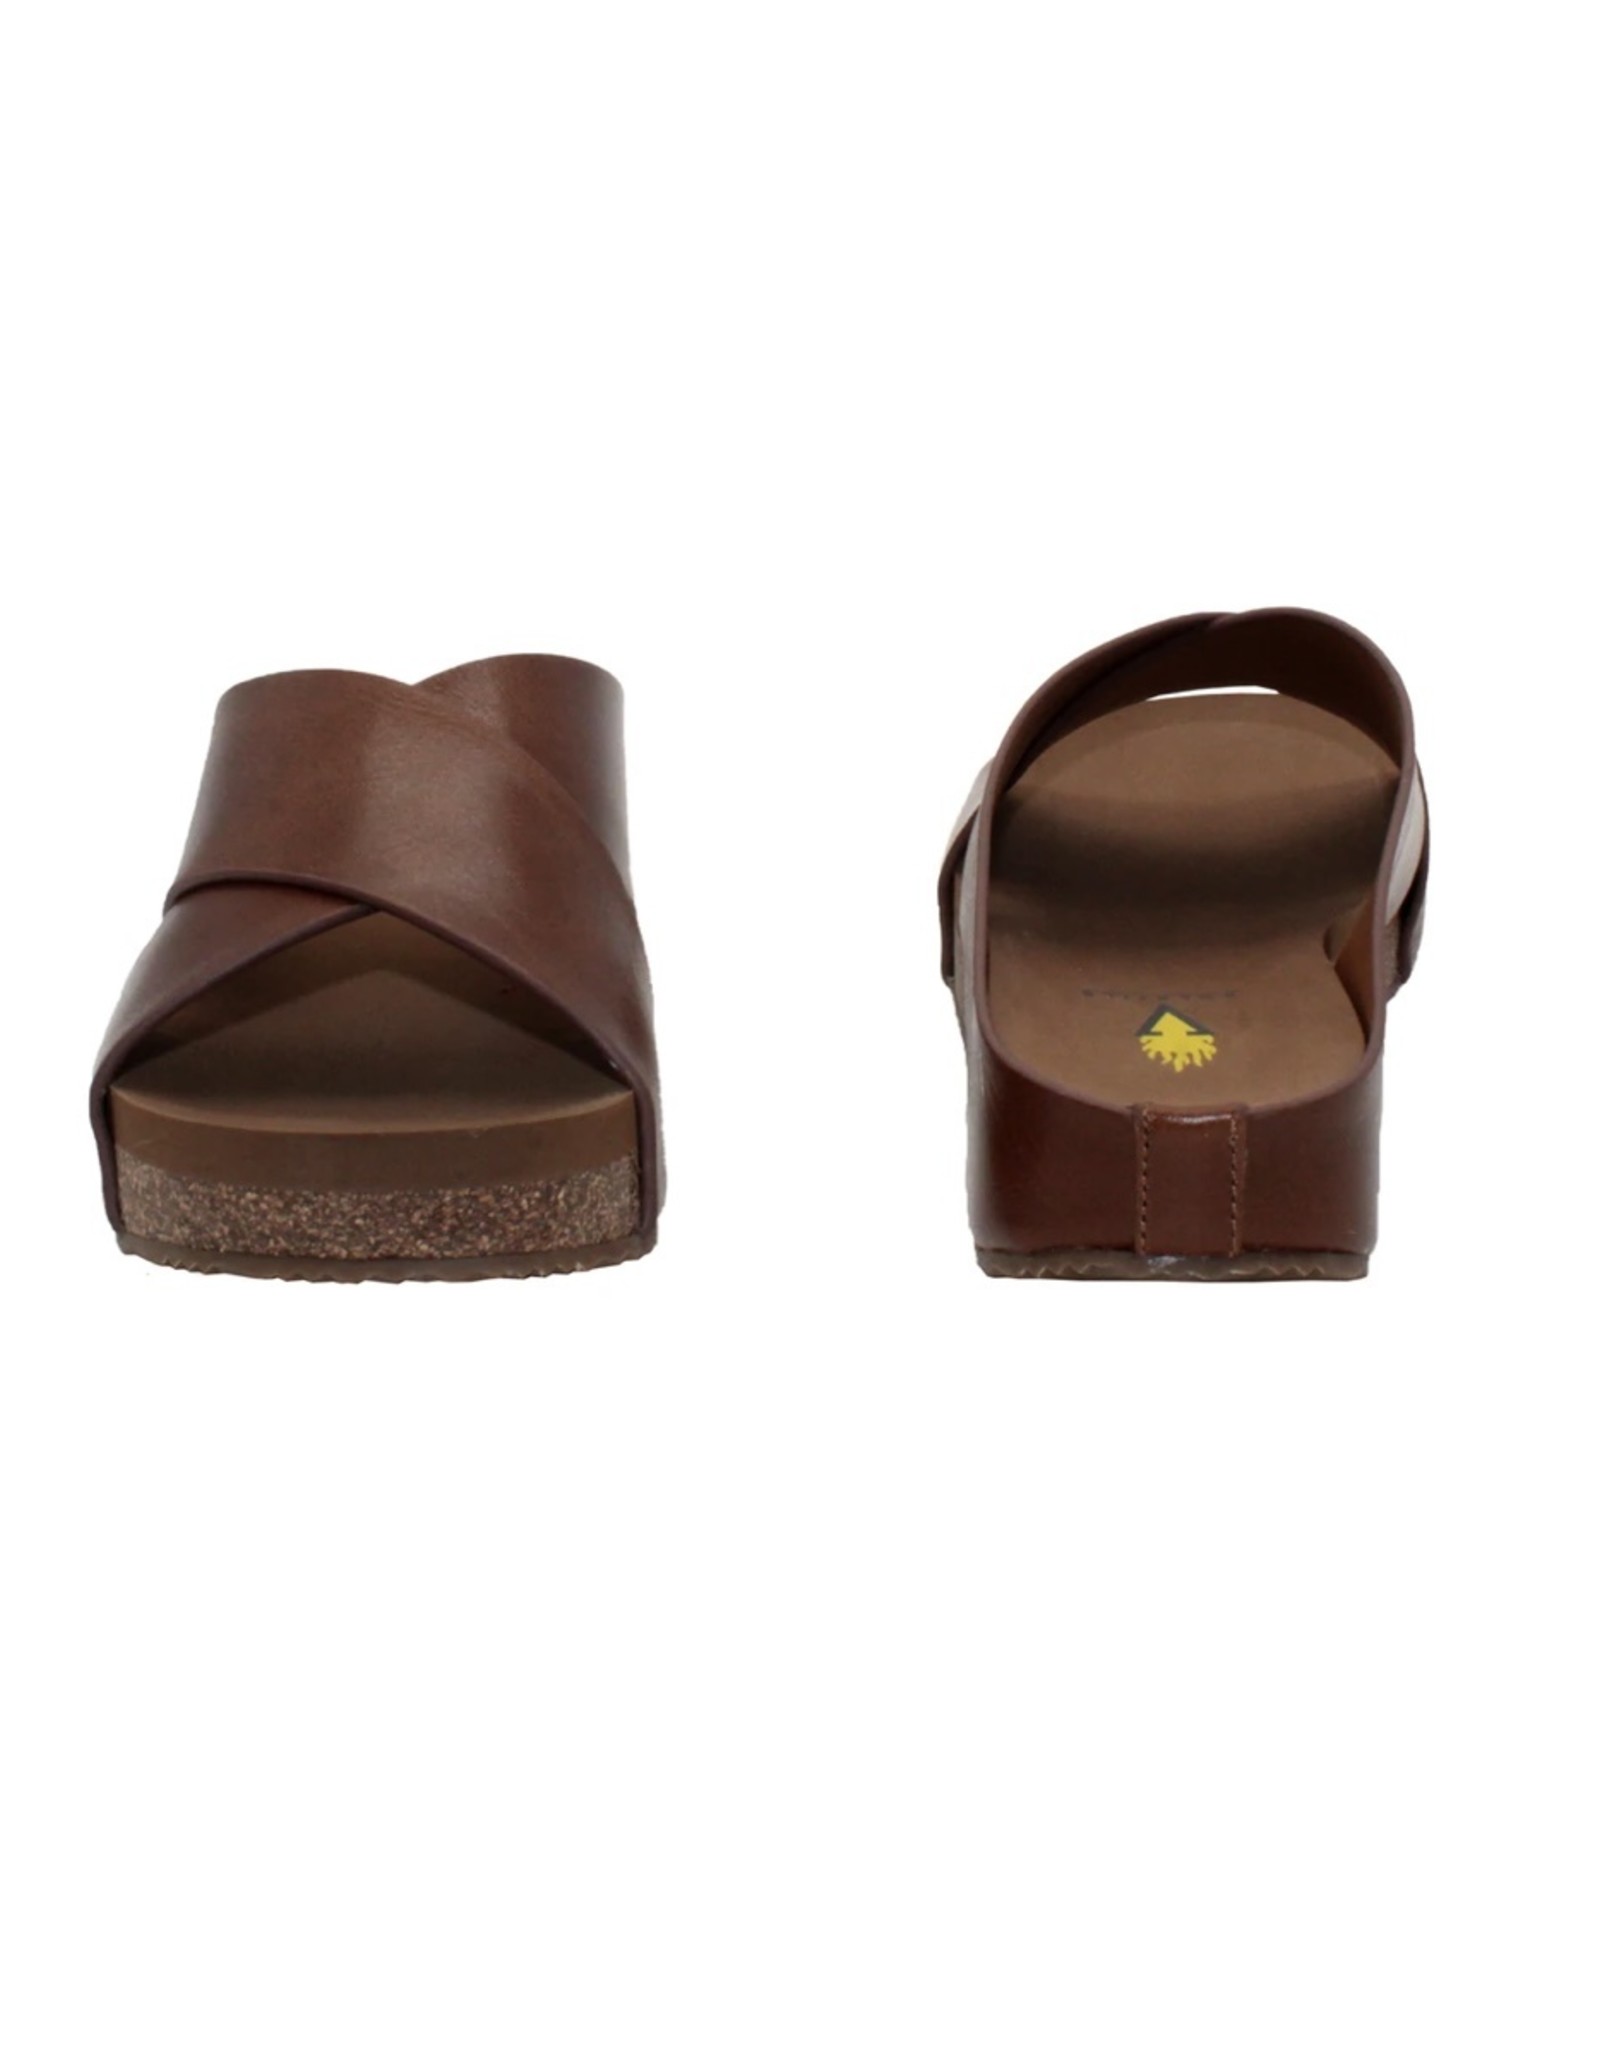 Volatile Ablette Rustic Leather Criss-Cross Sandal